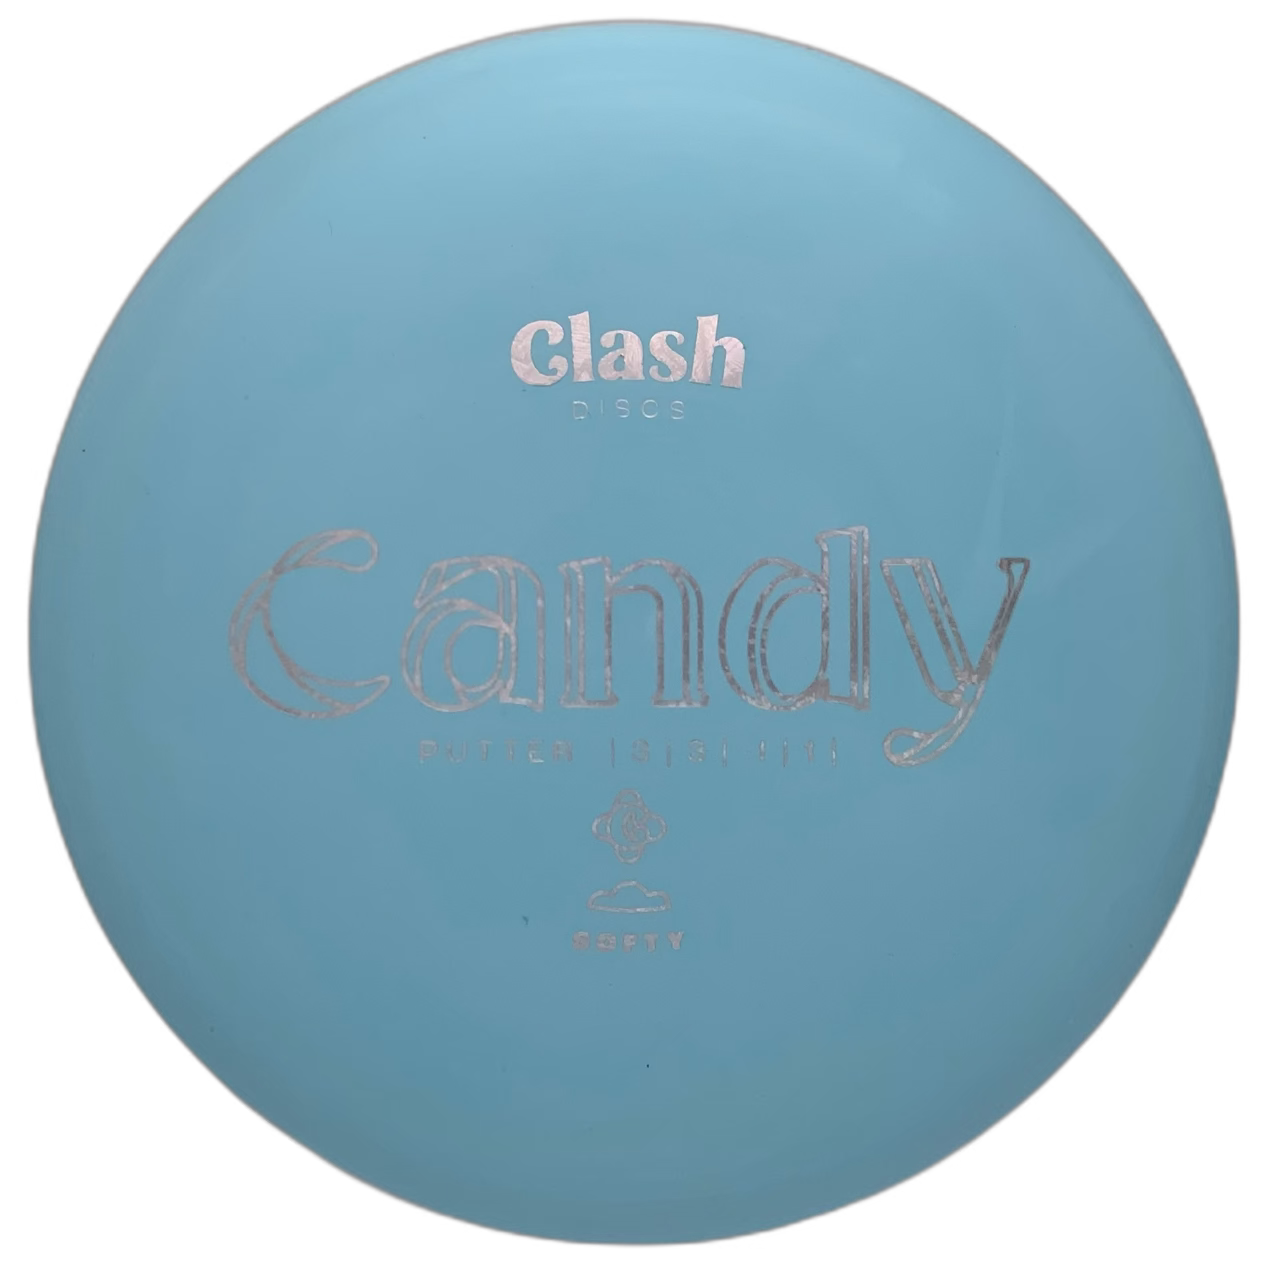 Clash Candy - Astro Discs TX - Houston Disc Golf